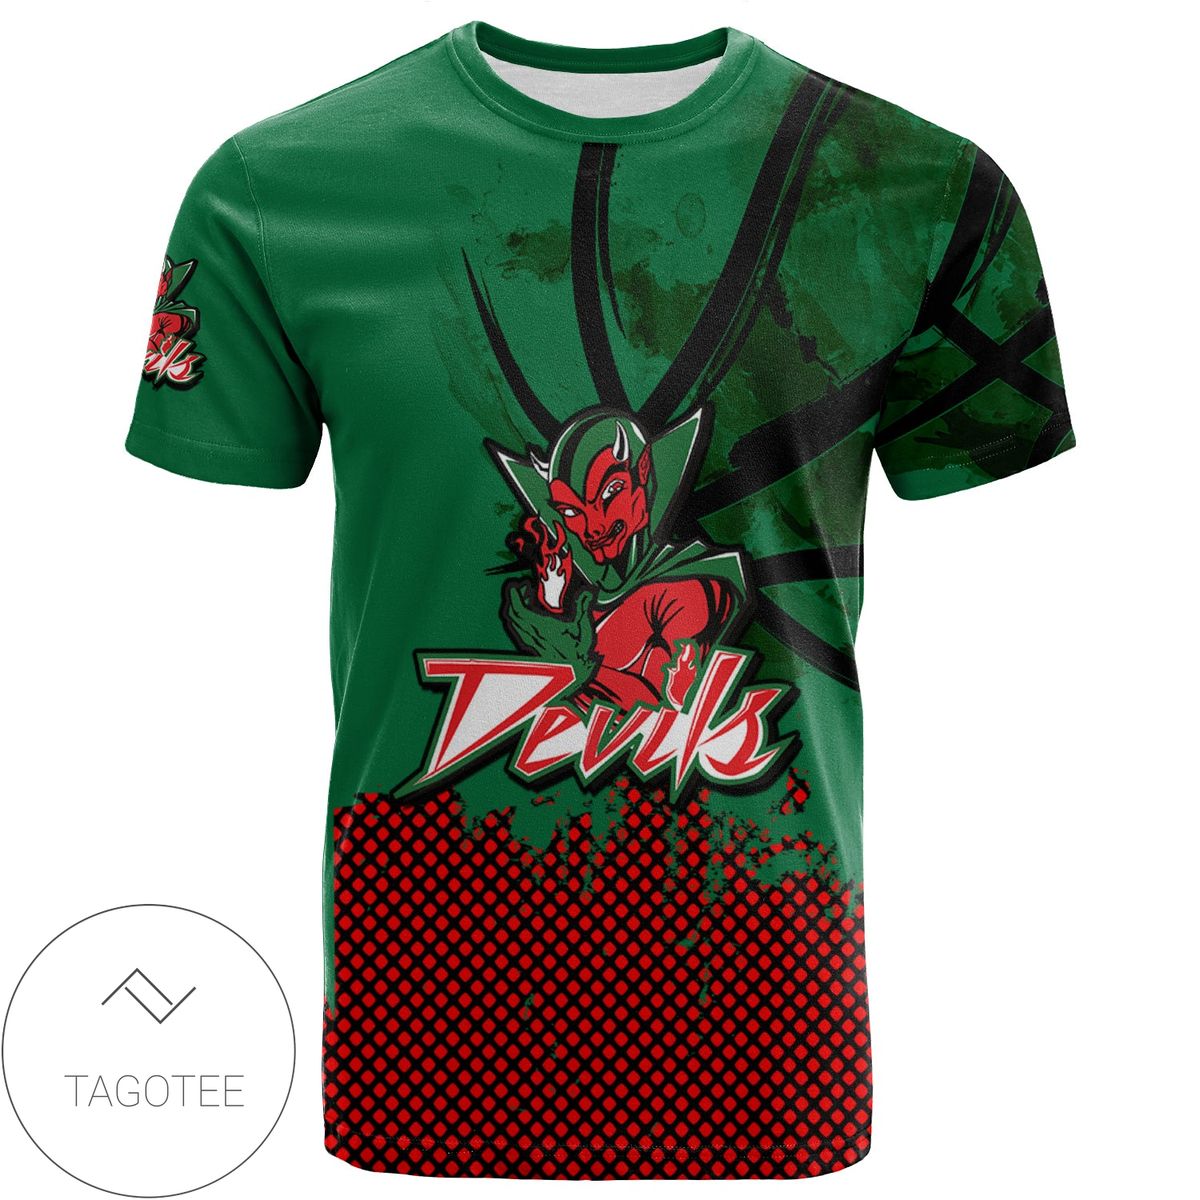 Mississippi Valley State Delta Devils All Over Print T-shirt Men's Basketball Net Grunge Pattern- NCAA